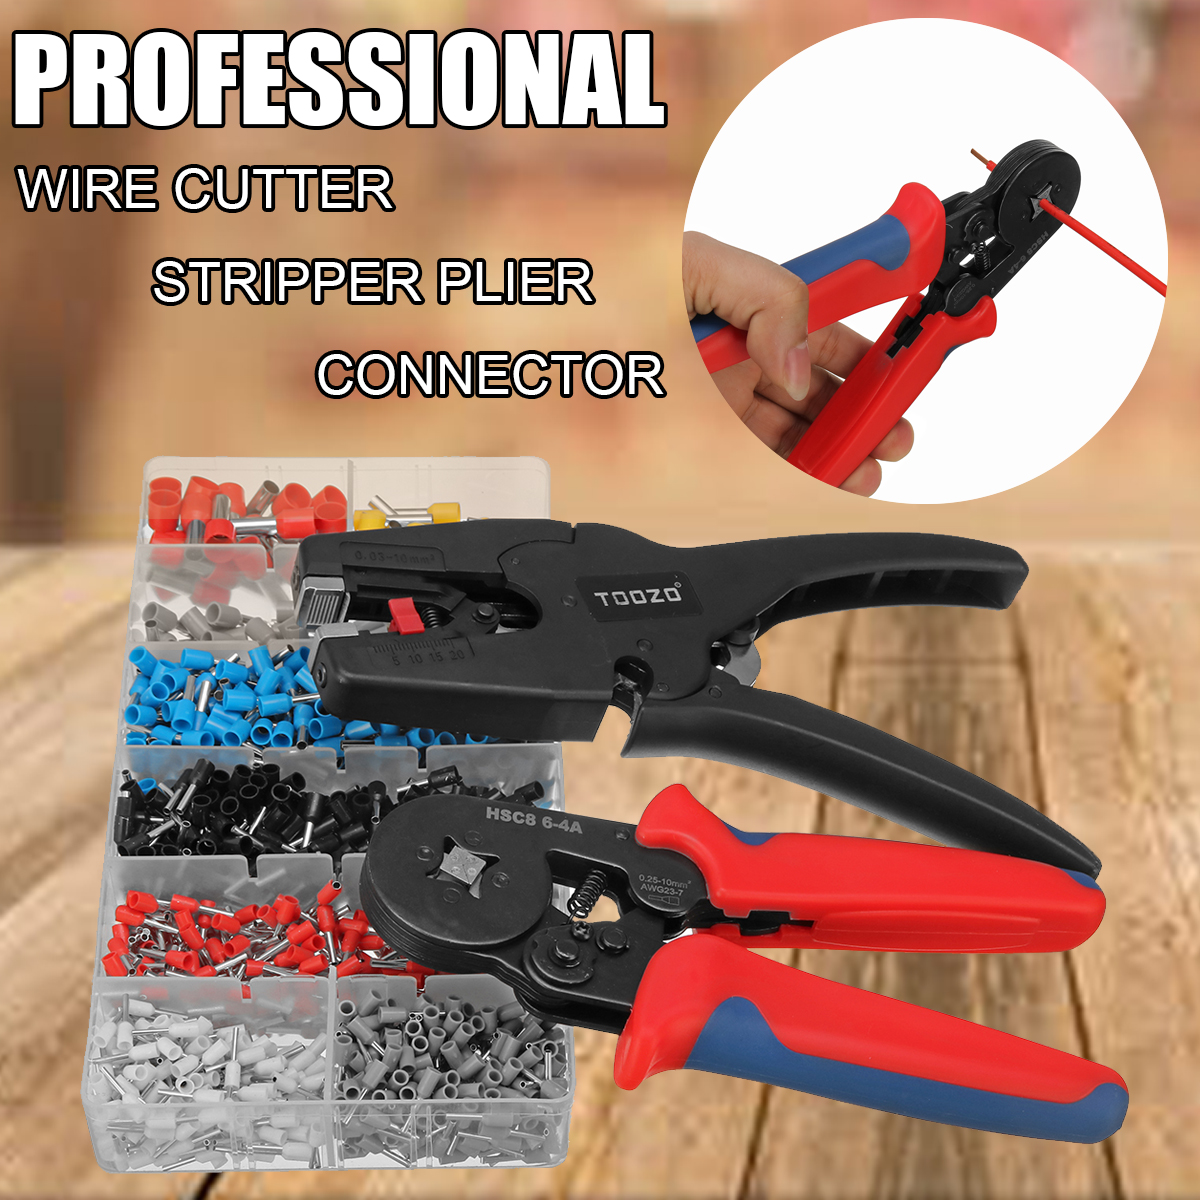 Professional-Crimper-Plier-Wire-Cutter-Stripper-1200Pcs-Electrical-Crimp-Terminals-1450329-1